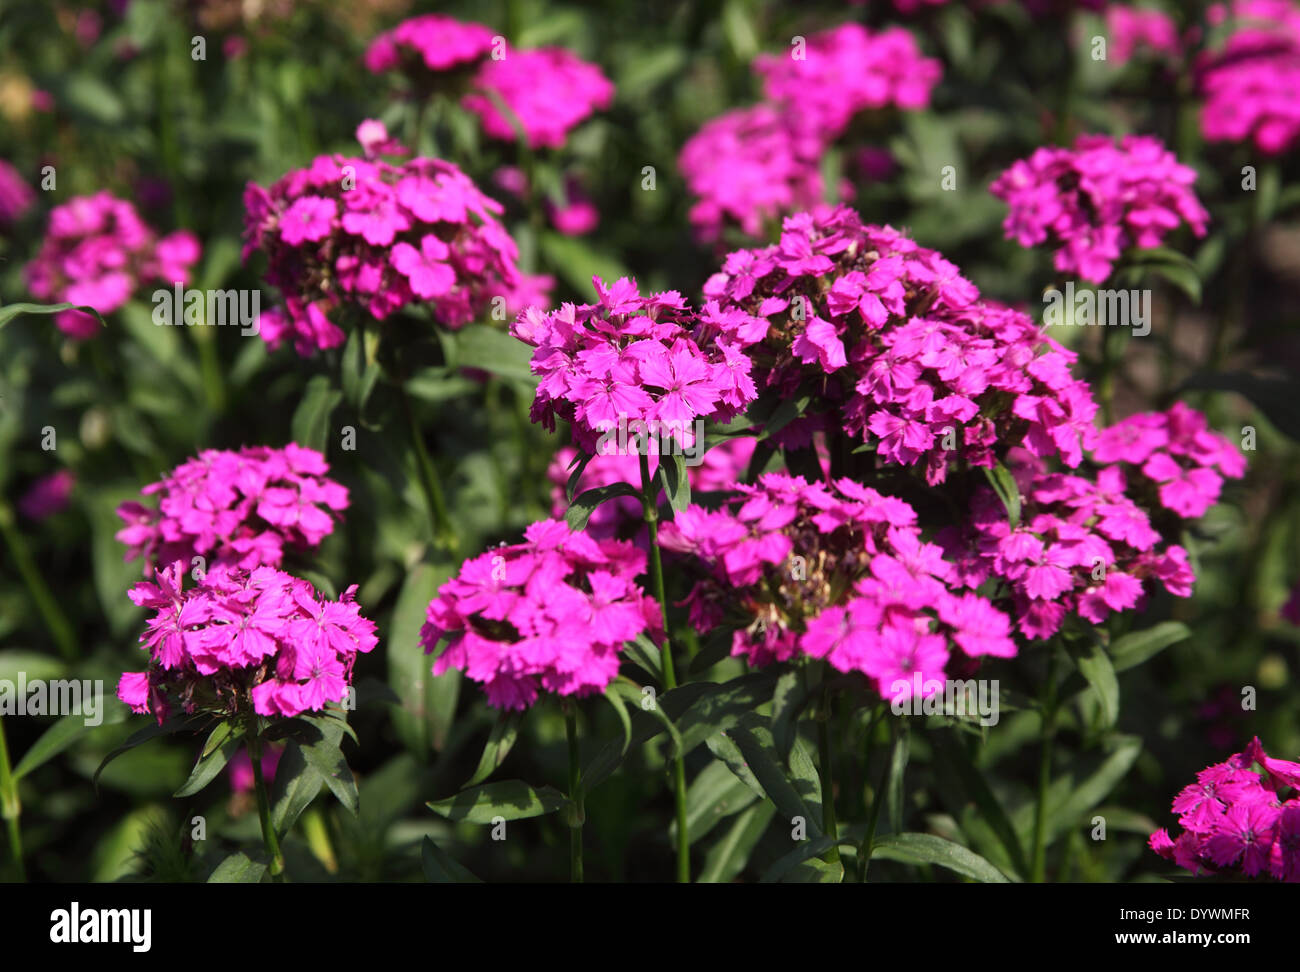 Flores de amazon fotografías e imágenes de alta resolución - Alamy